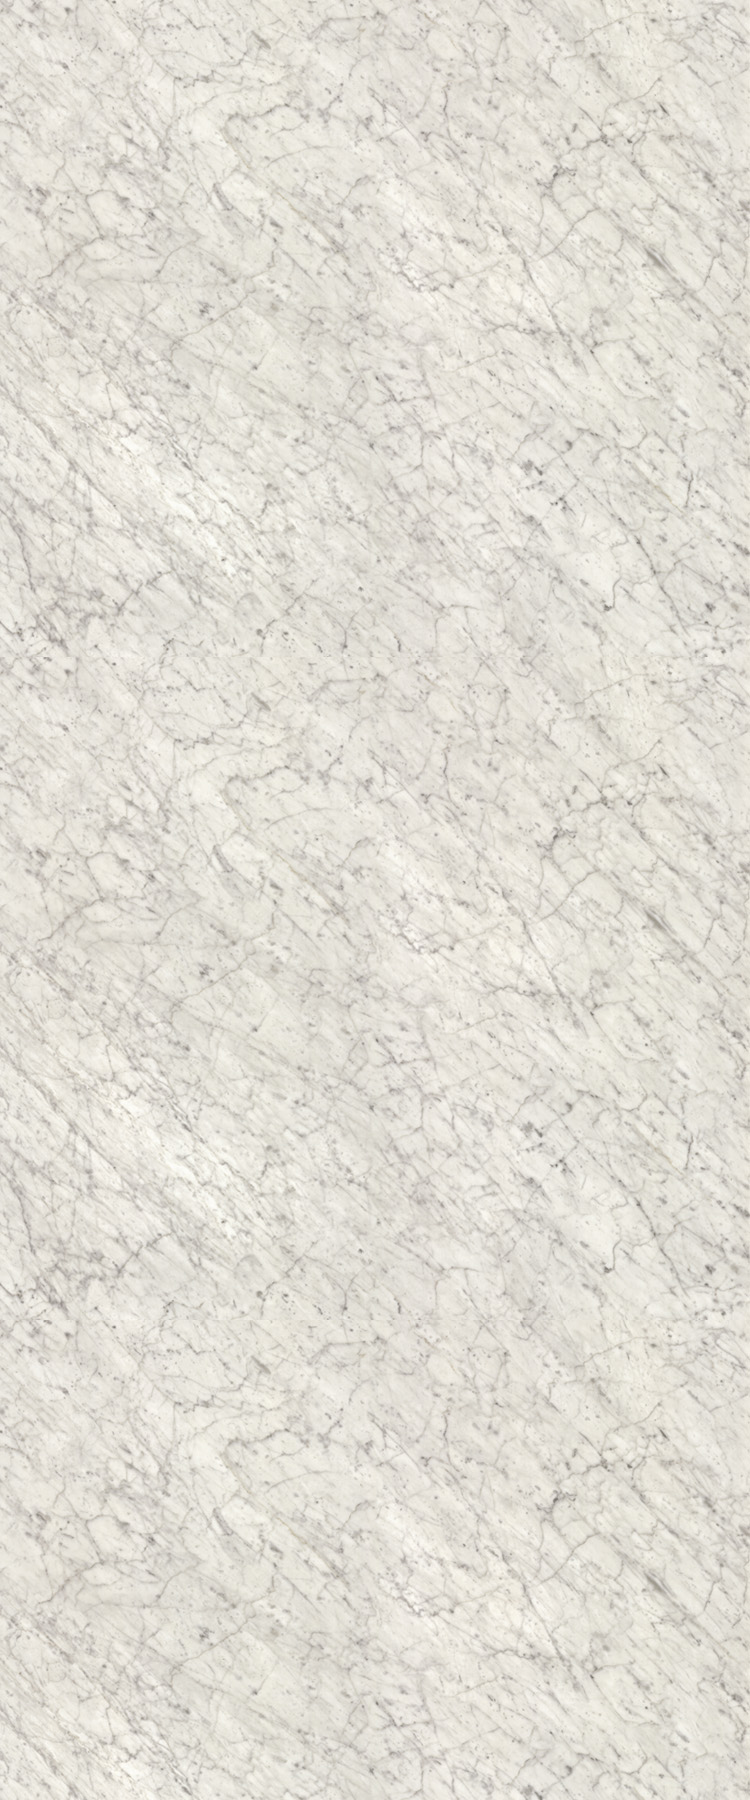 FORMICA Feuille stratifié Carrara Bianco 6696-1258 48x96 Matte comptoir Mica 4x8 